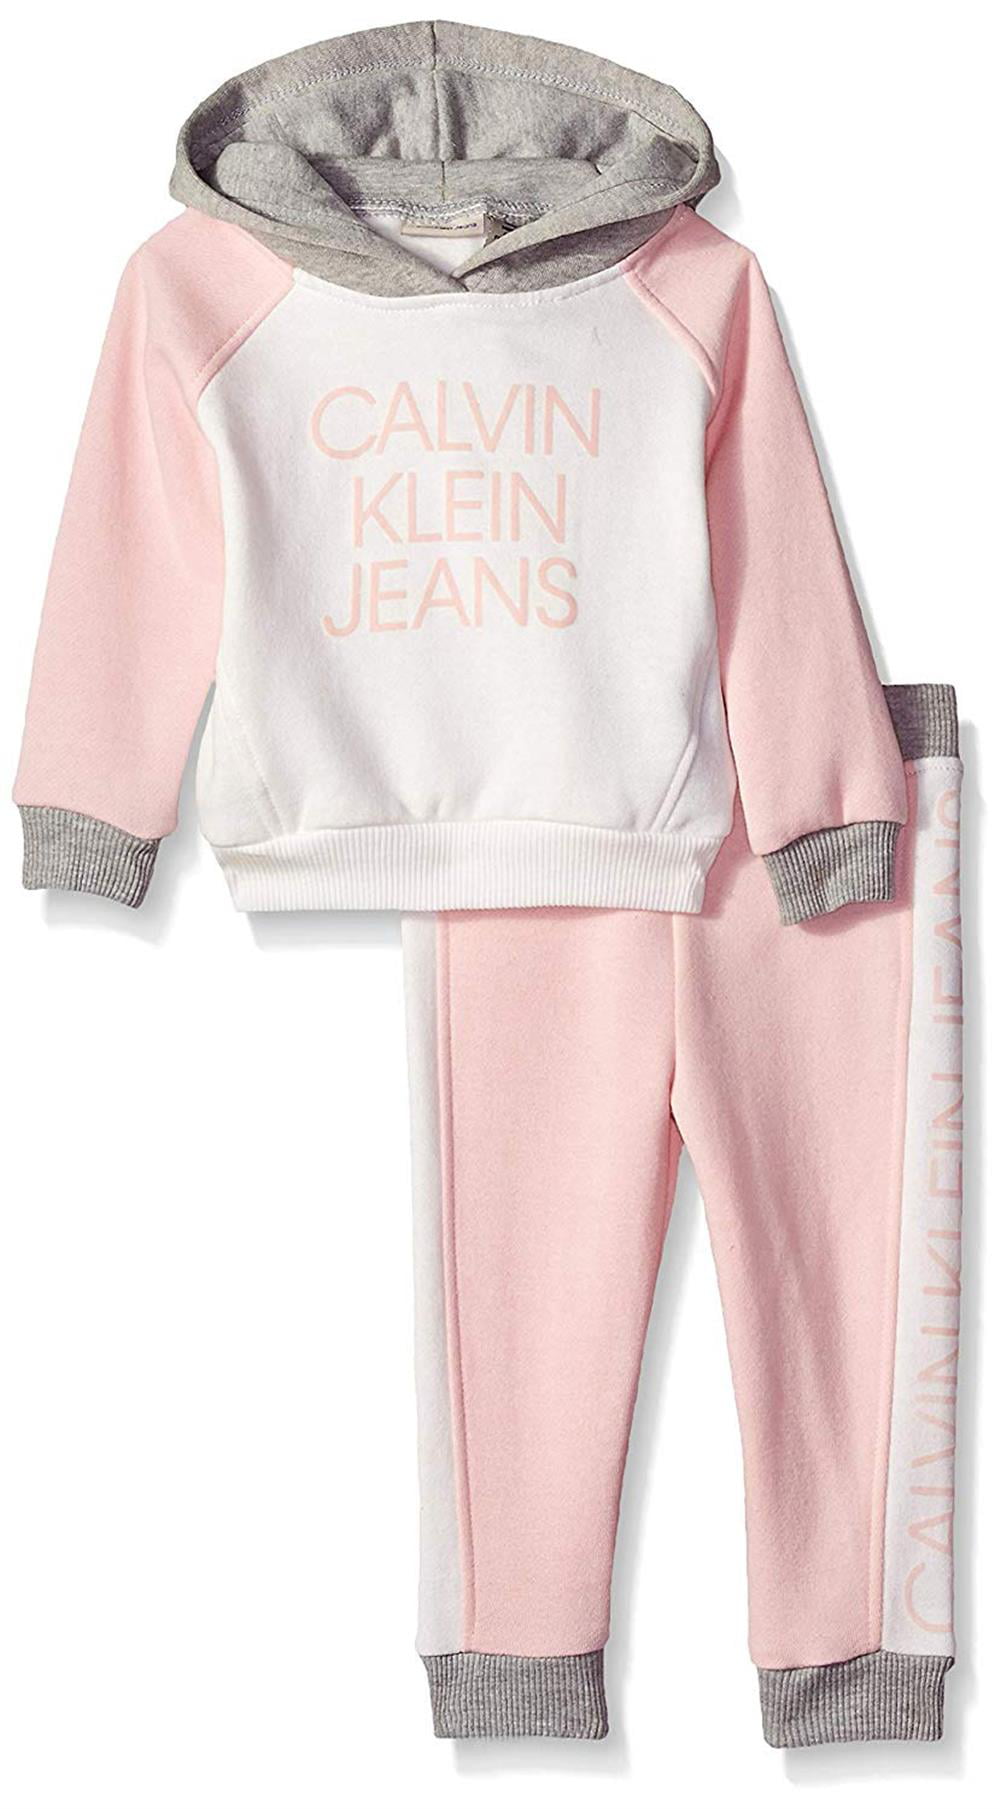 Calvin Klein Kids Girls 4-6x 2-Piece Hooded Jogger Set (Pink 5) -  